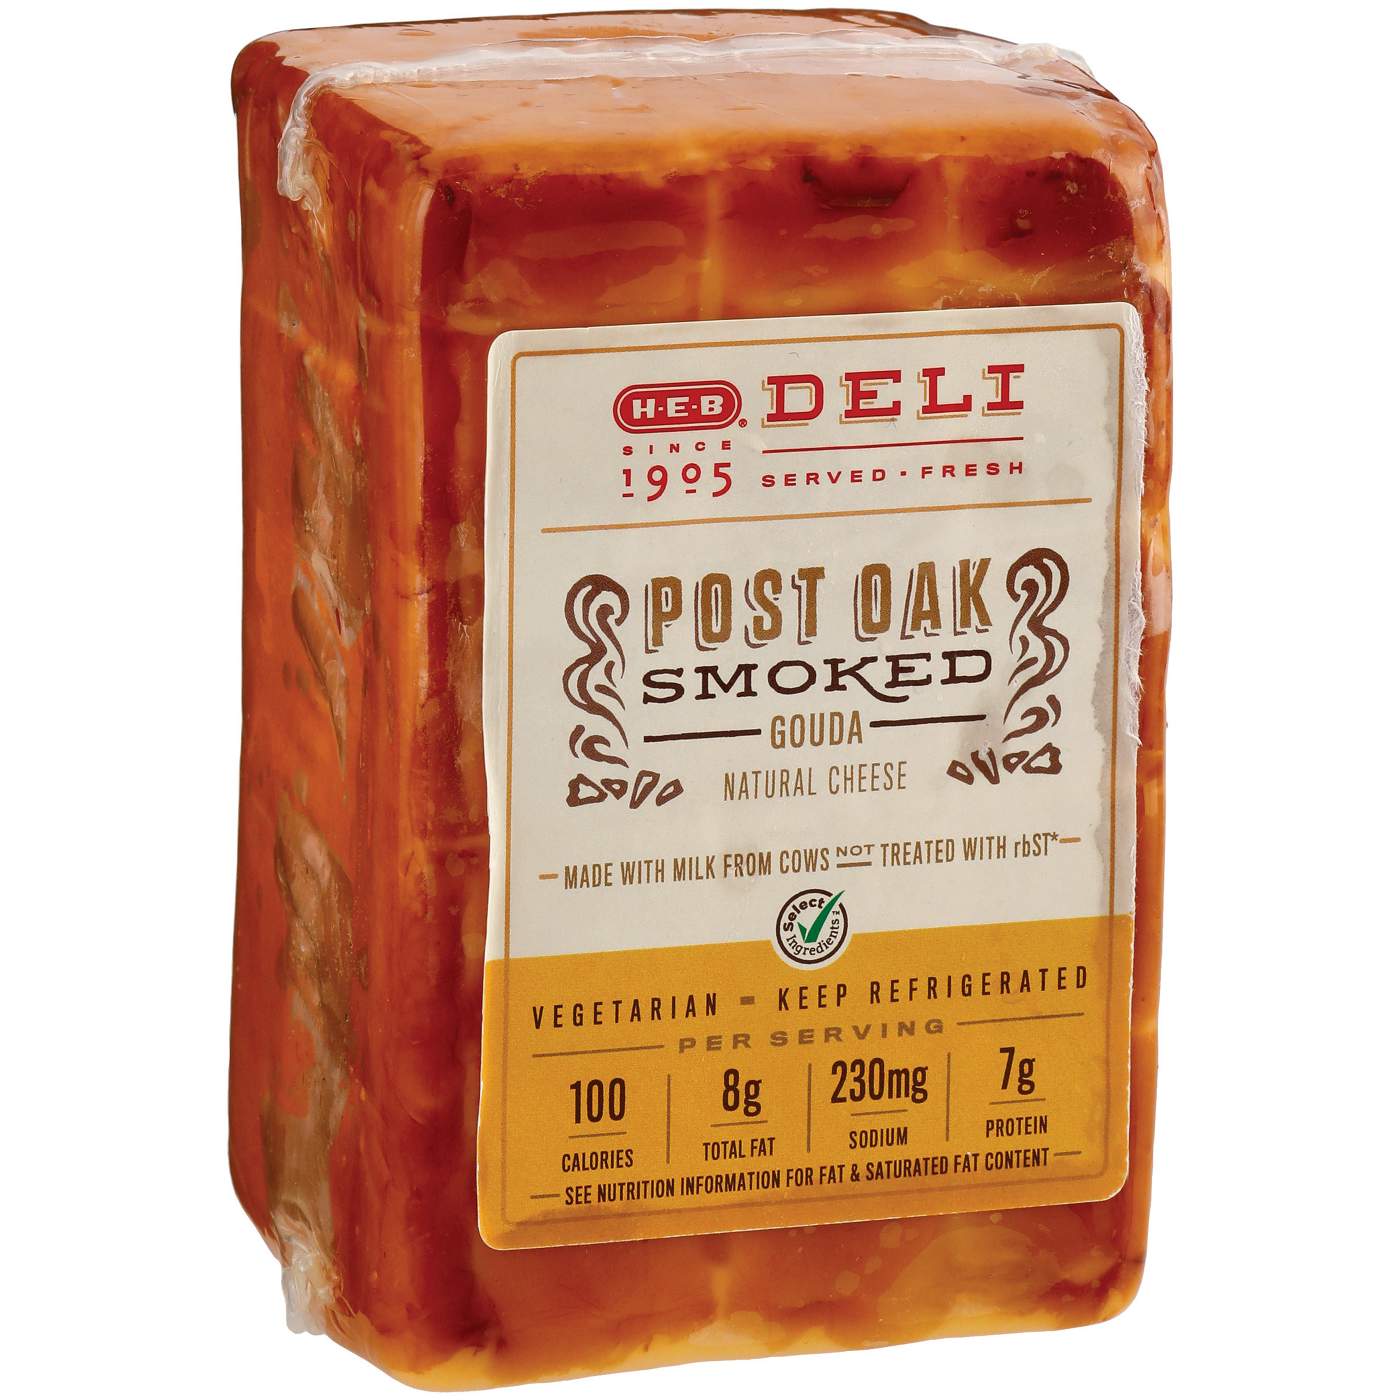 H-E-B Deli Sliced Post Oak Smoked Gouda Cheese; image 2 of 2